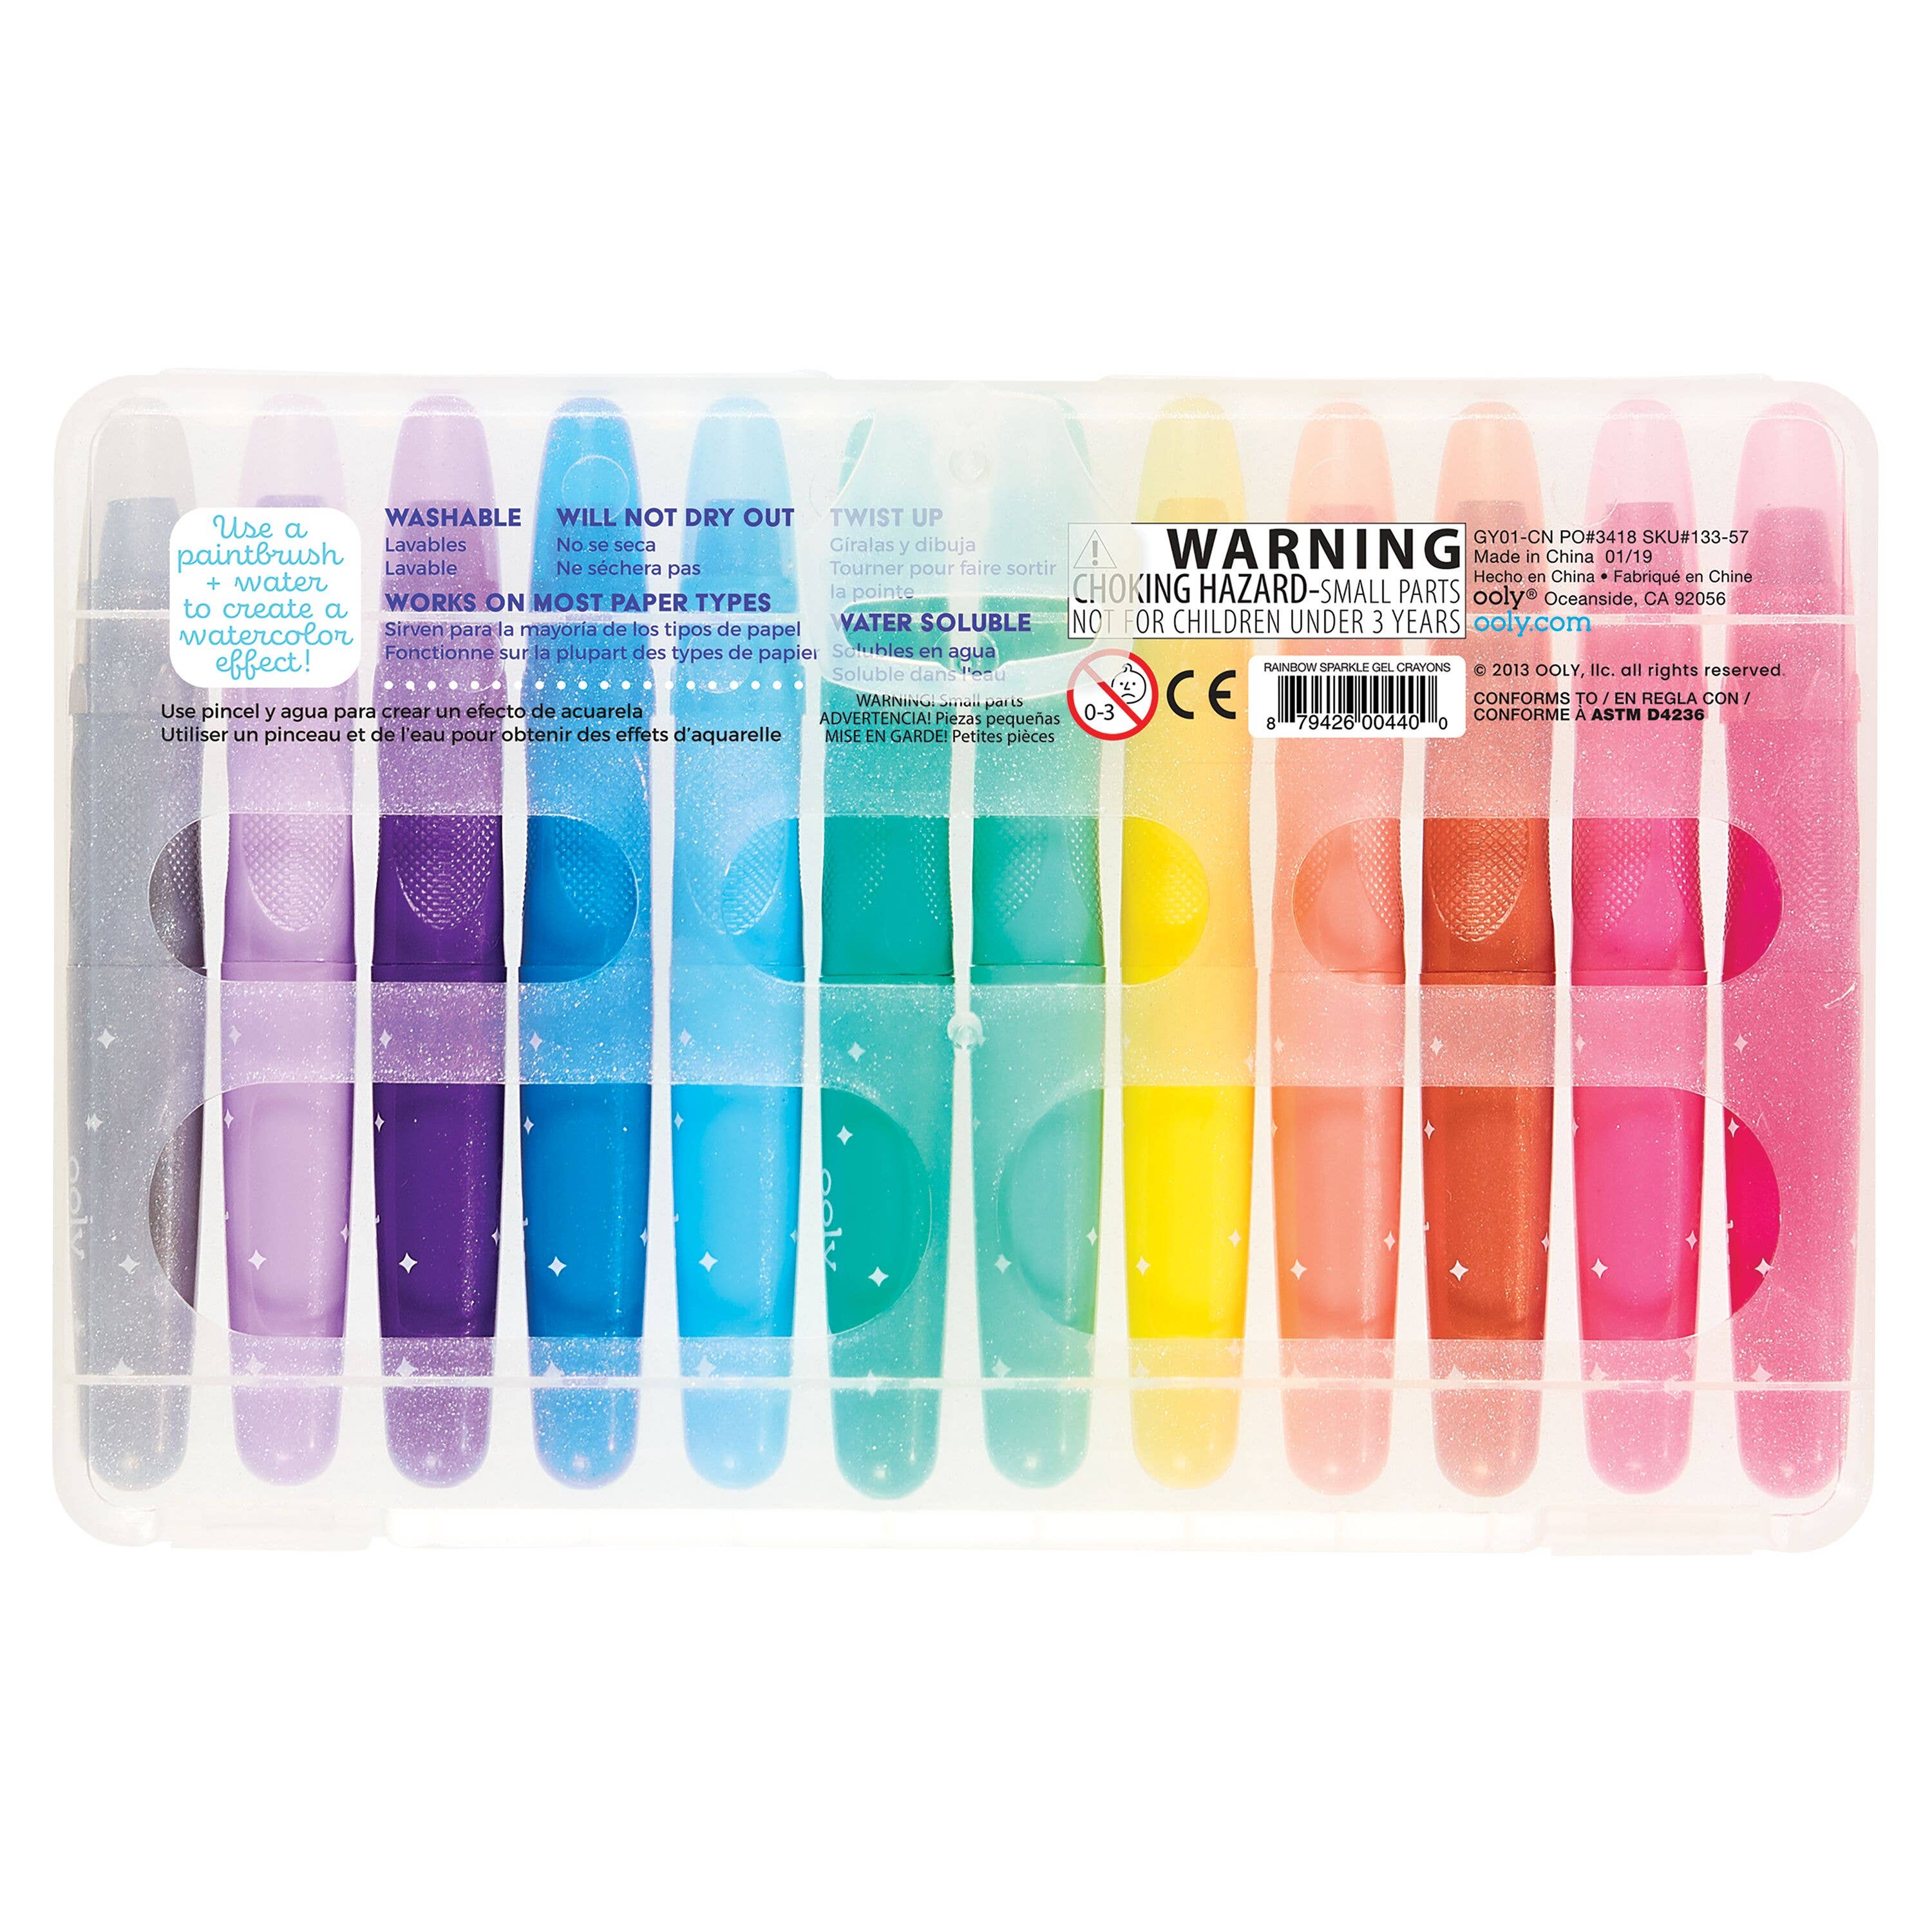 Ooly art supplies Rainbow Sparkle Metallic Gel Crayons - Little Birdies